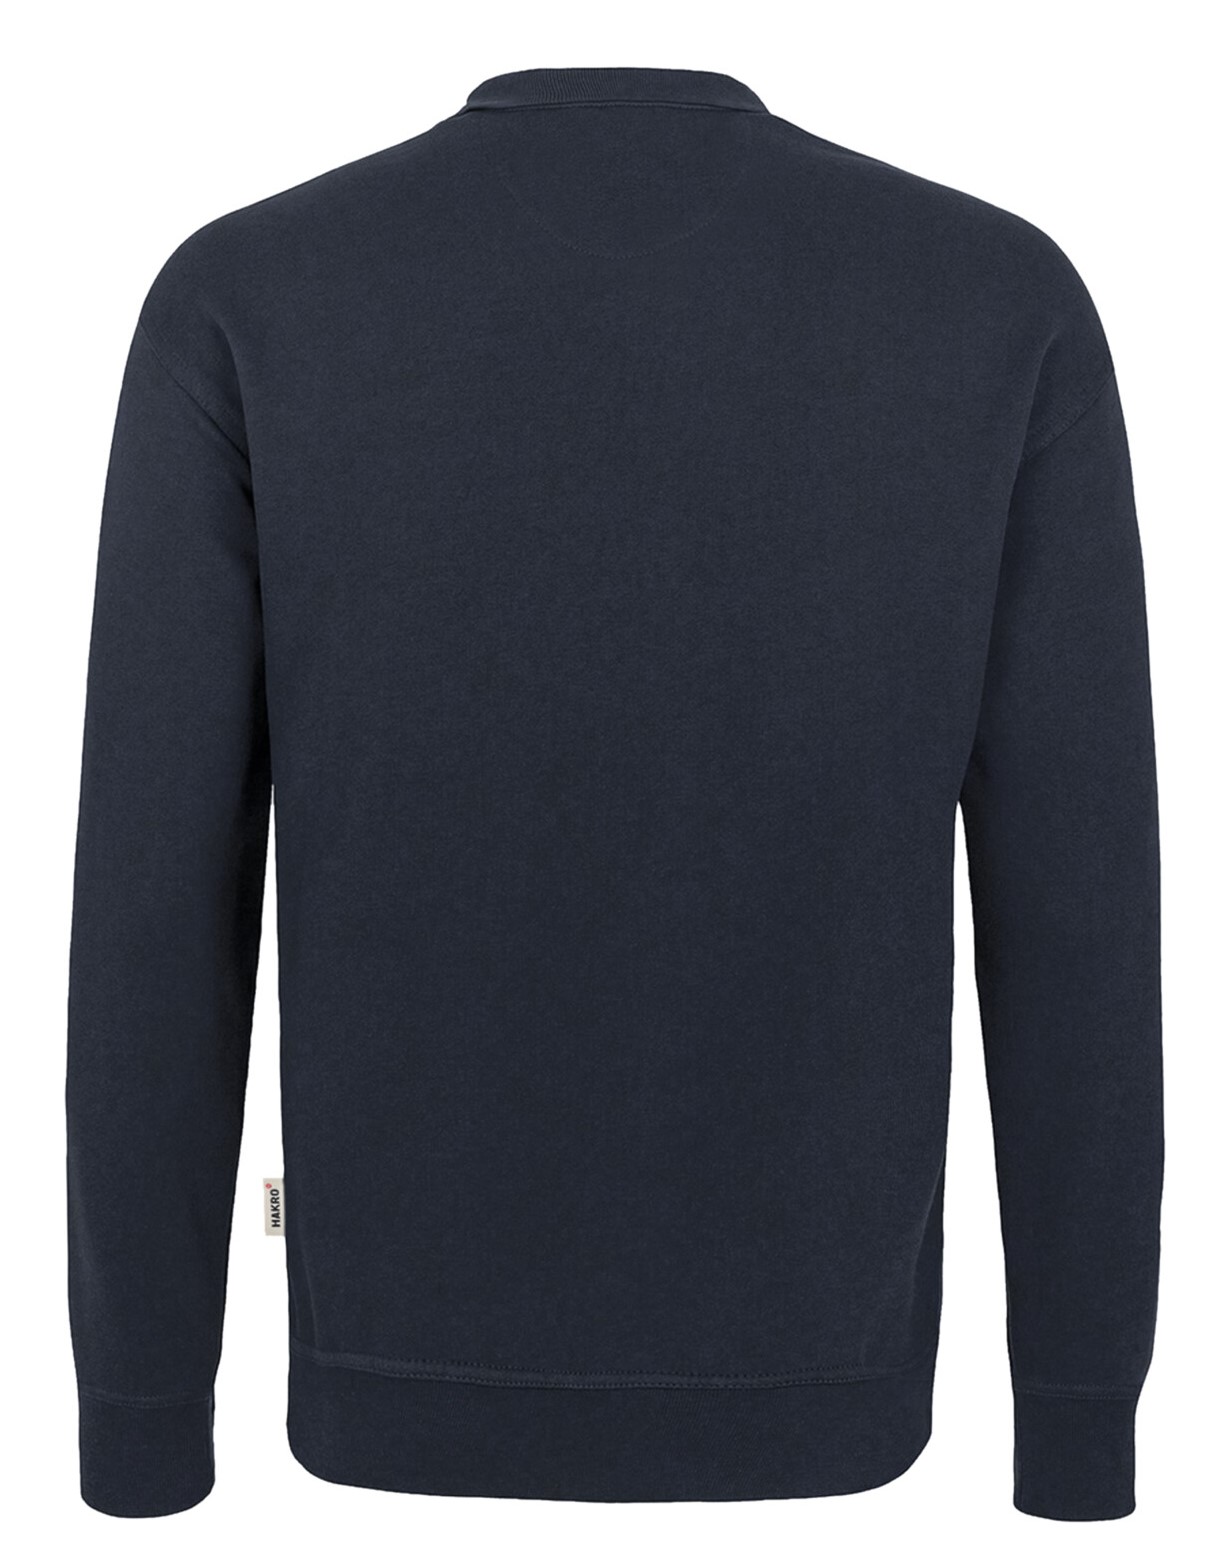 HAKRO Pocket-Sweatshirt 457 Premium